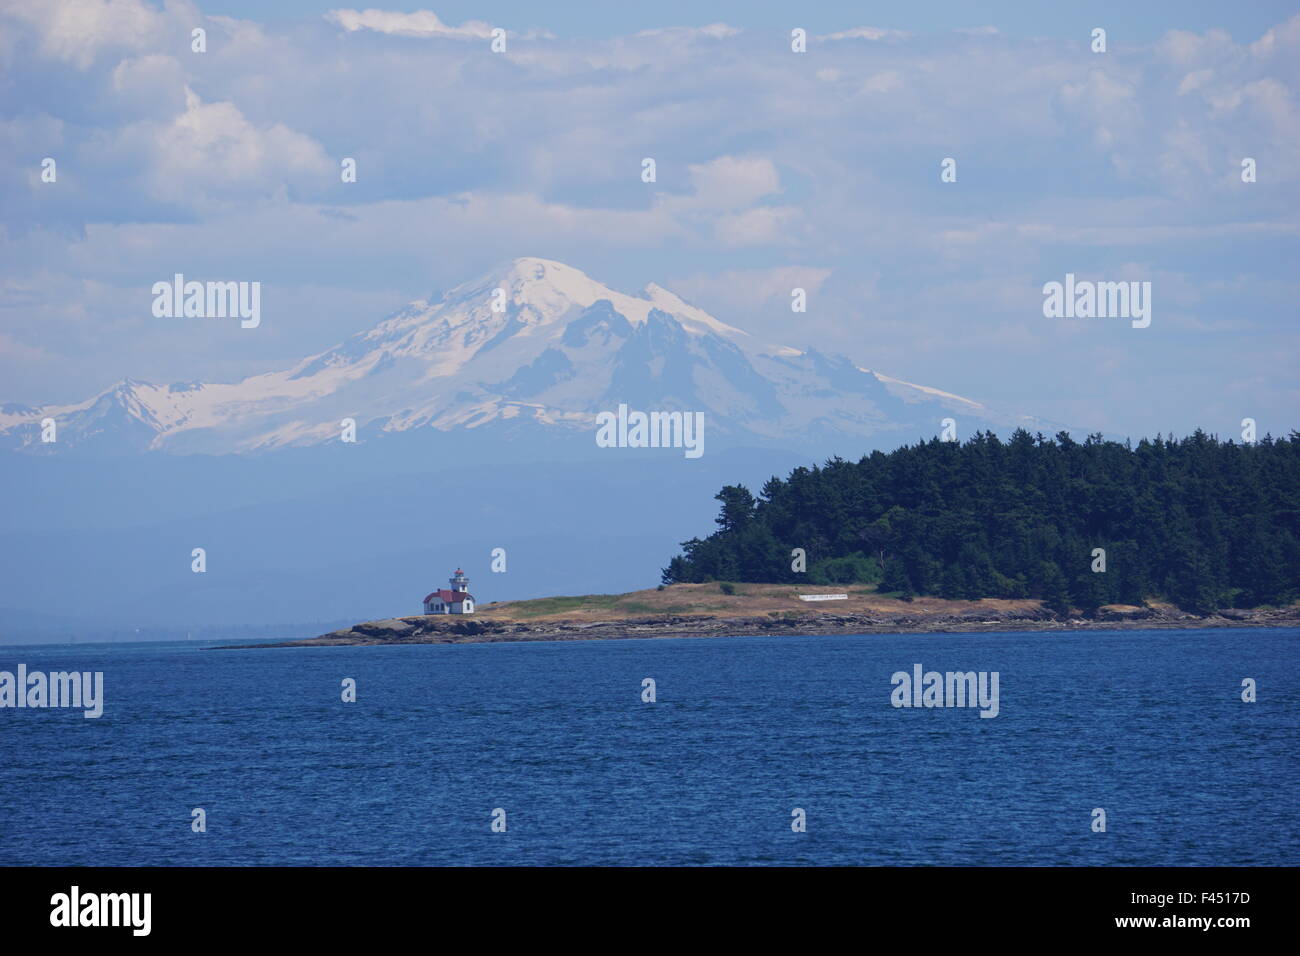 Mount Baker as seen from the Salish Sea near Bellingham, Washington USA Stock Photo